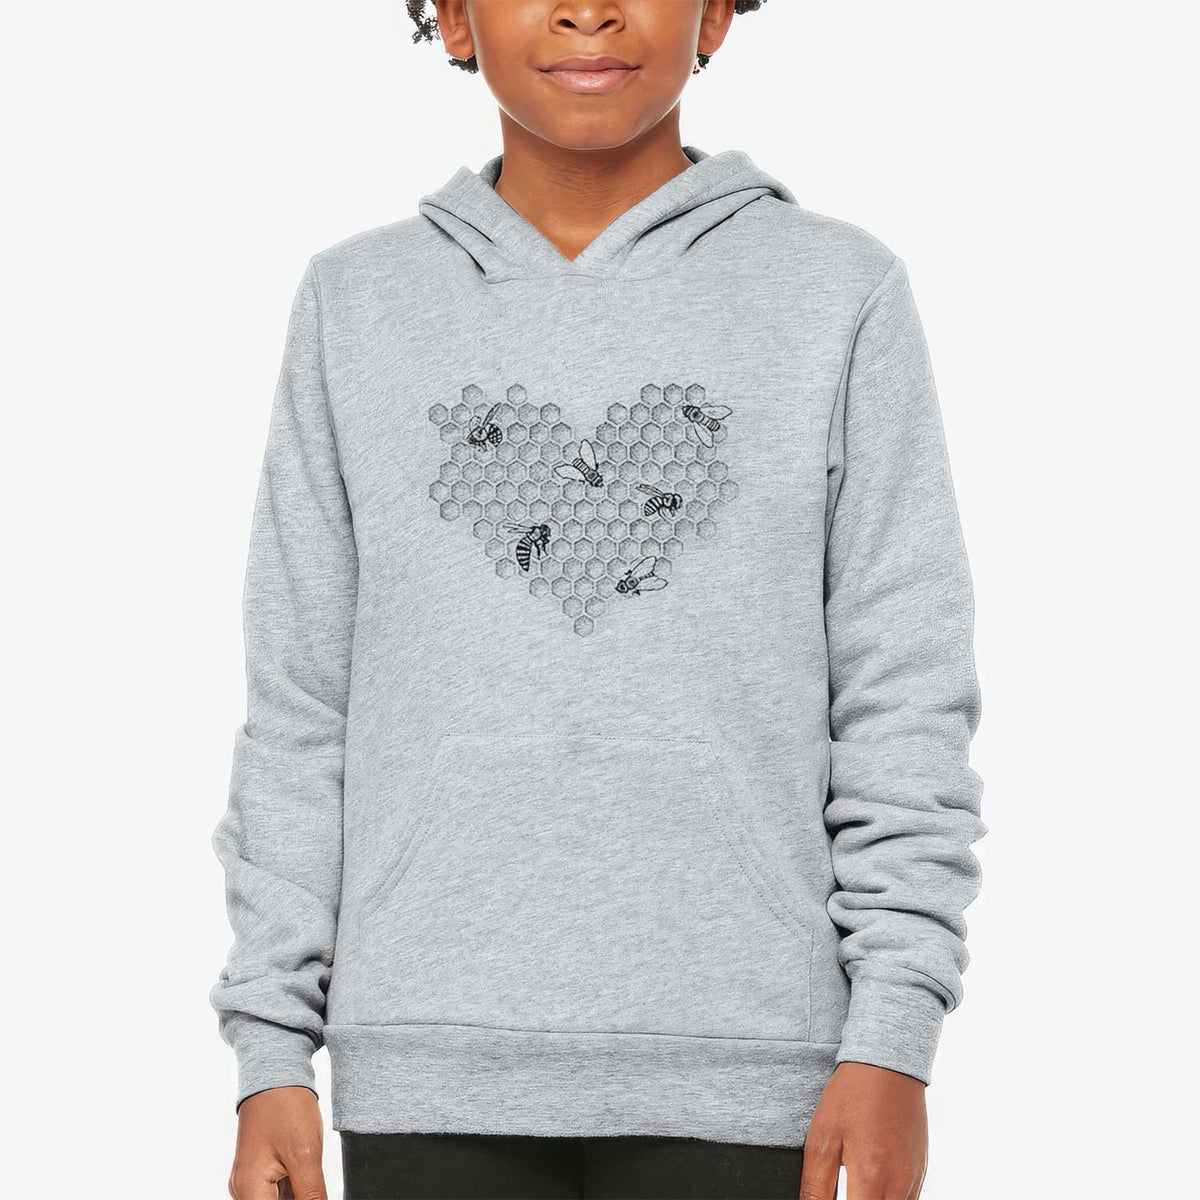 Honeycomb Heart with Bees - Youth Hoodie Sweatshirt